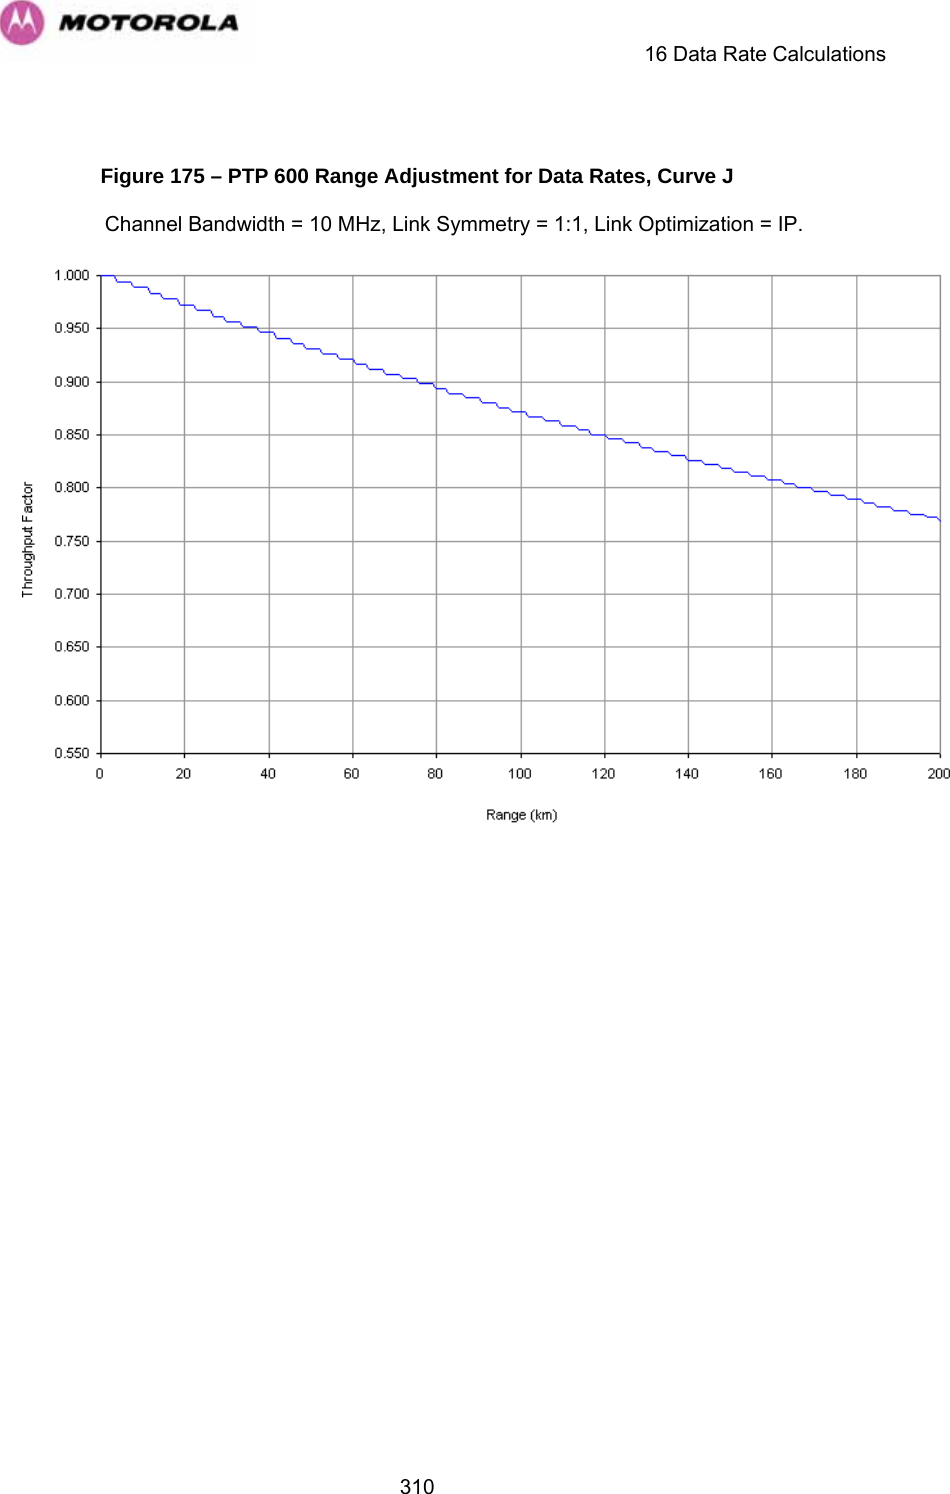     16 Data Rate Calculations  310 Figure 175 – PTP 600 Range Adjustment for Data Rates, Curve J Channel Bandwidth = 10 MHz, Link Symmetry = 1:1, Link Optimization = IP.  